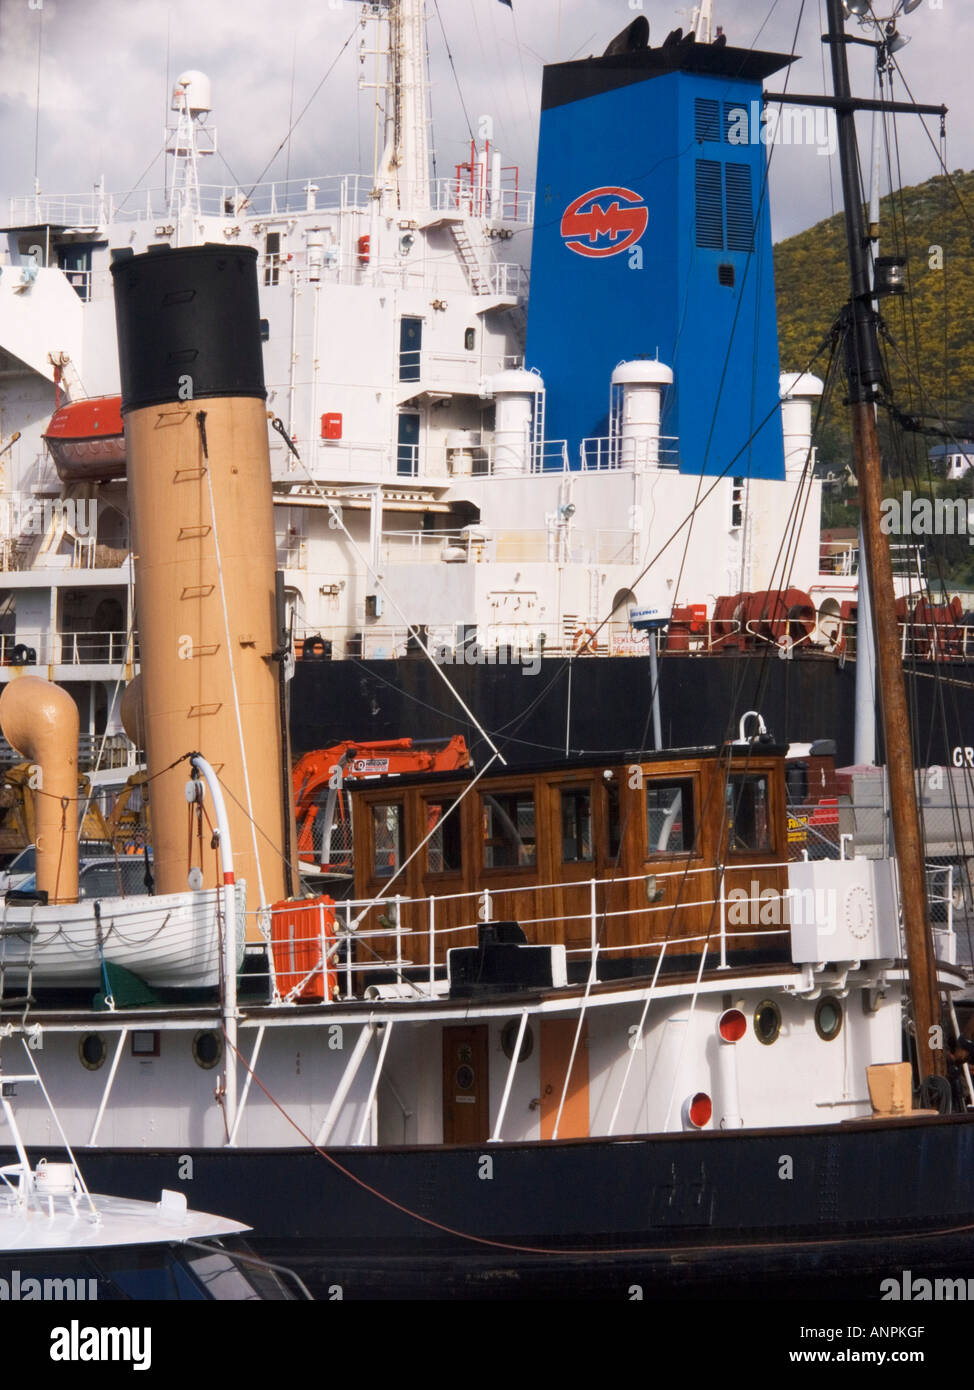 Vintage rimorchiatore a vapore e la nave da carico, Lyttelton, Nuova Zelanda Foto Stock